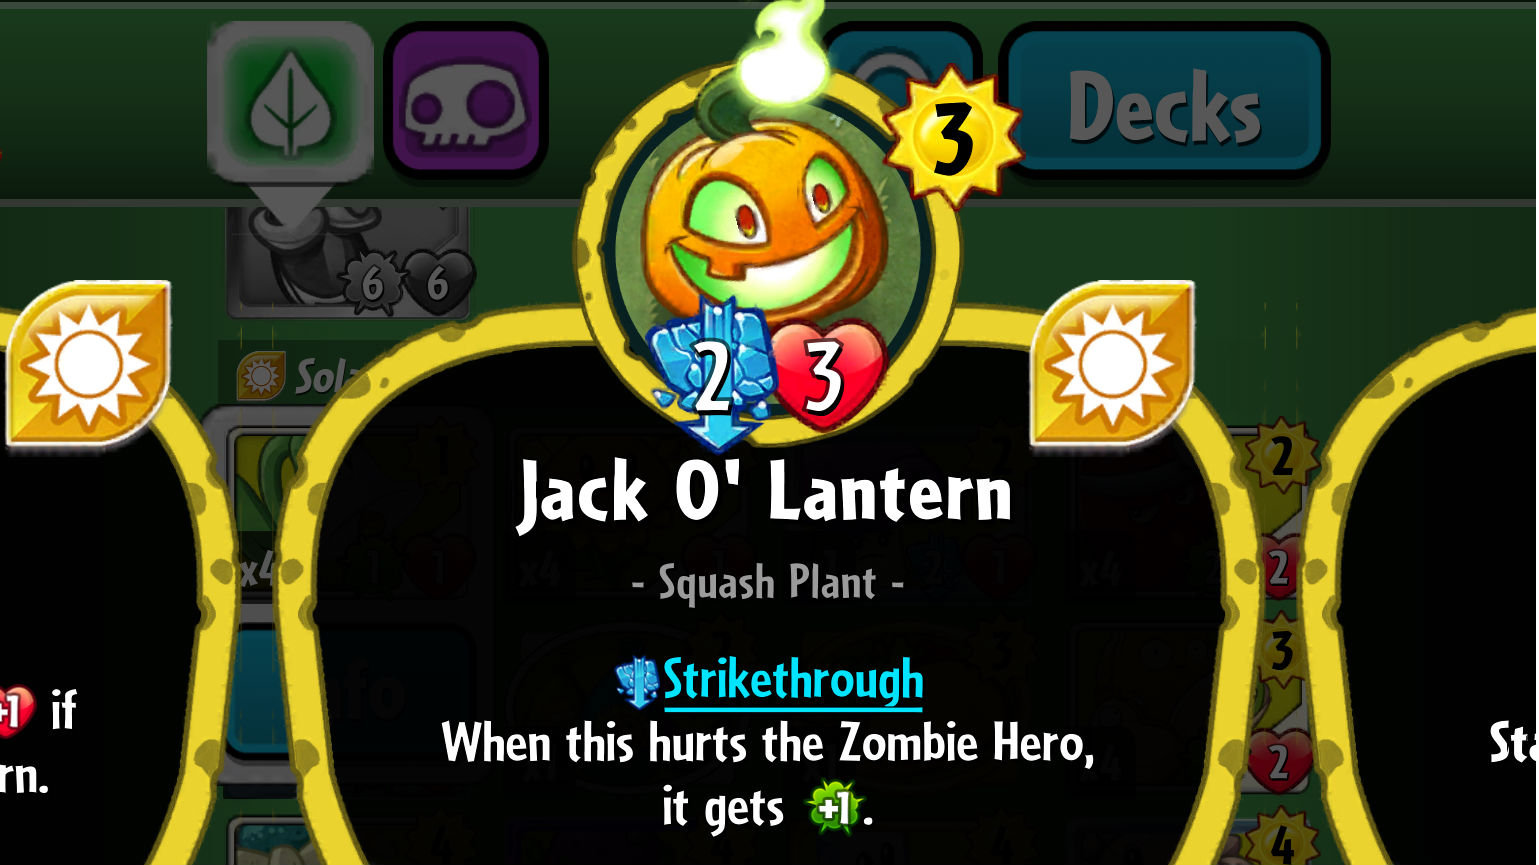 Plsnts vs. Zombies Heroes Jack O' Lantern